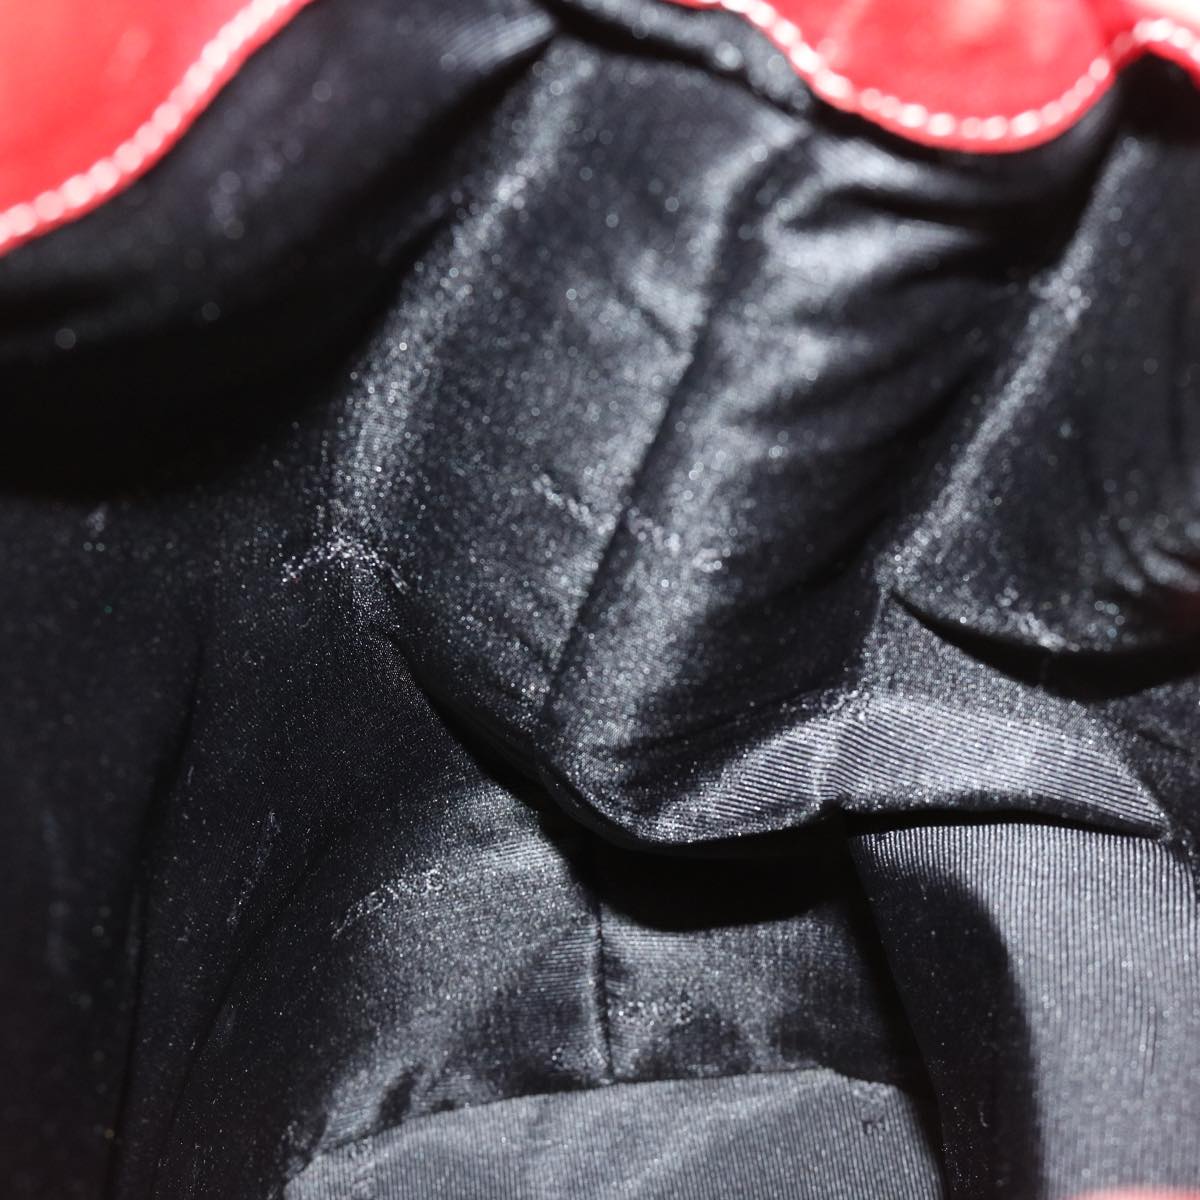 LOEWE Anagram Shoulder Bag Leather Red Auth fm3195